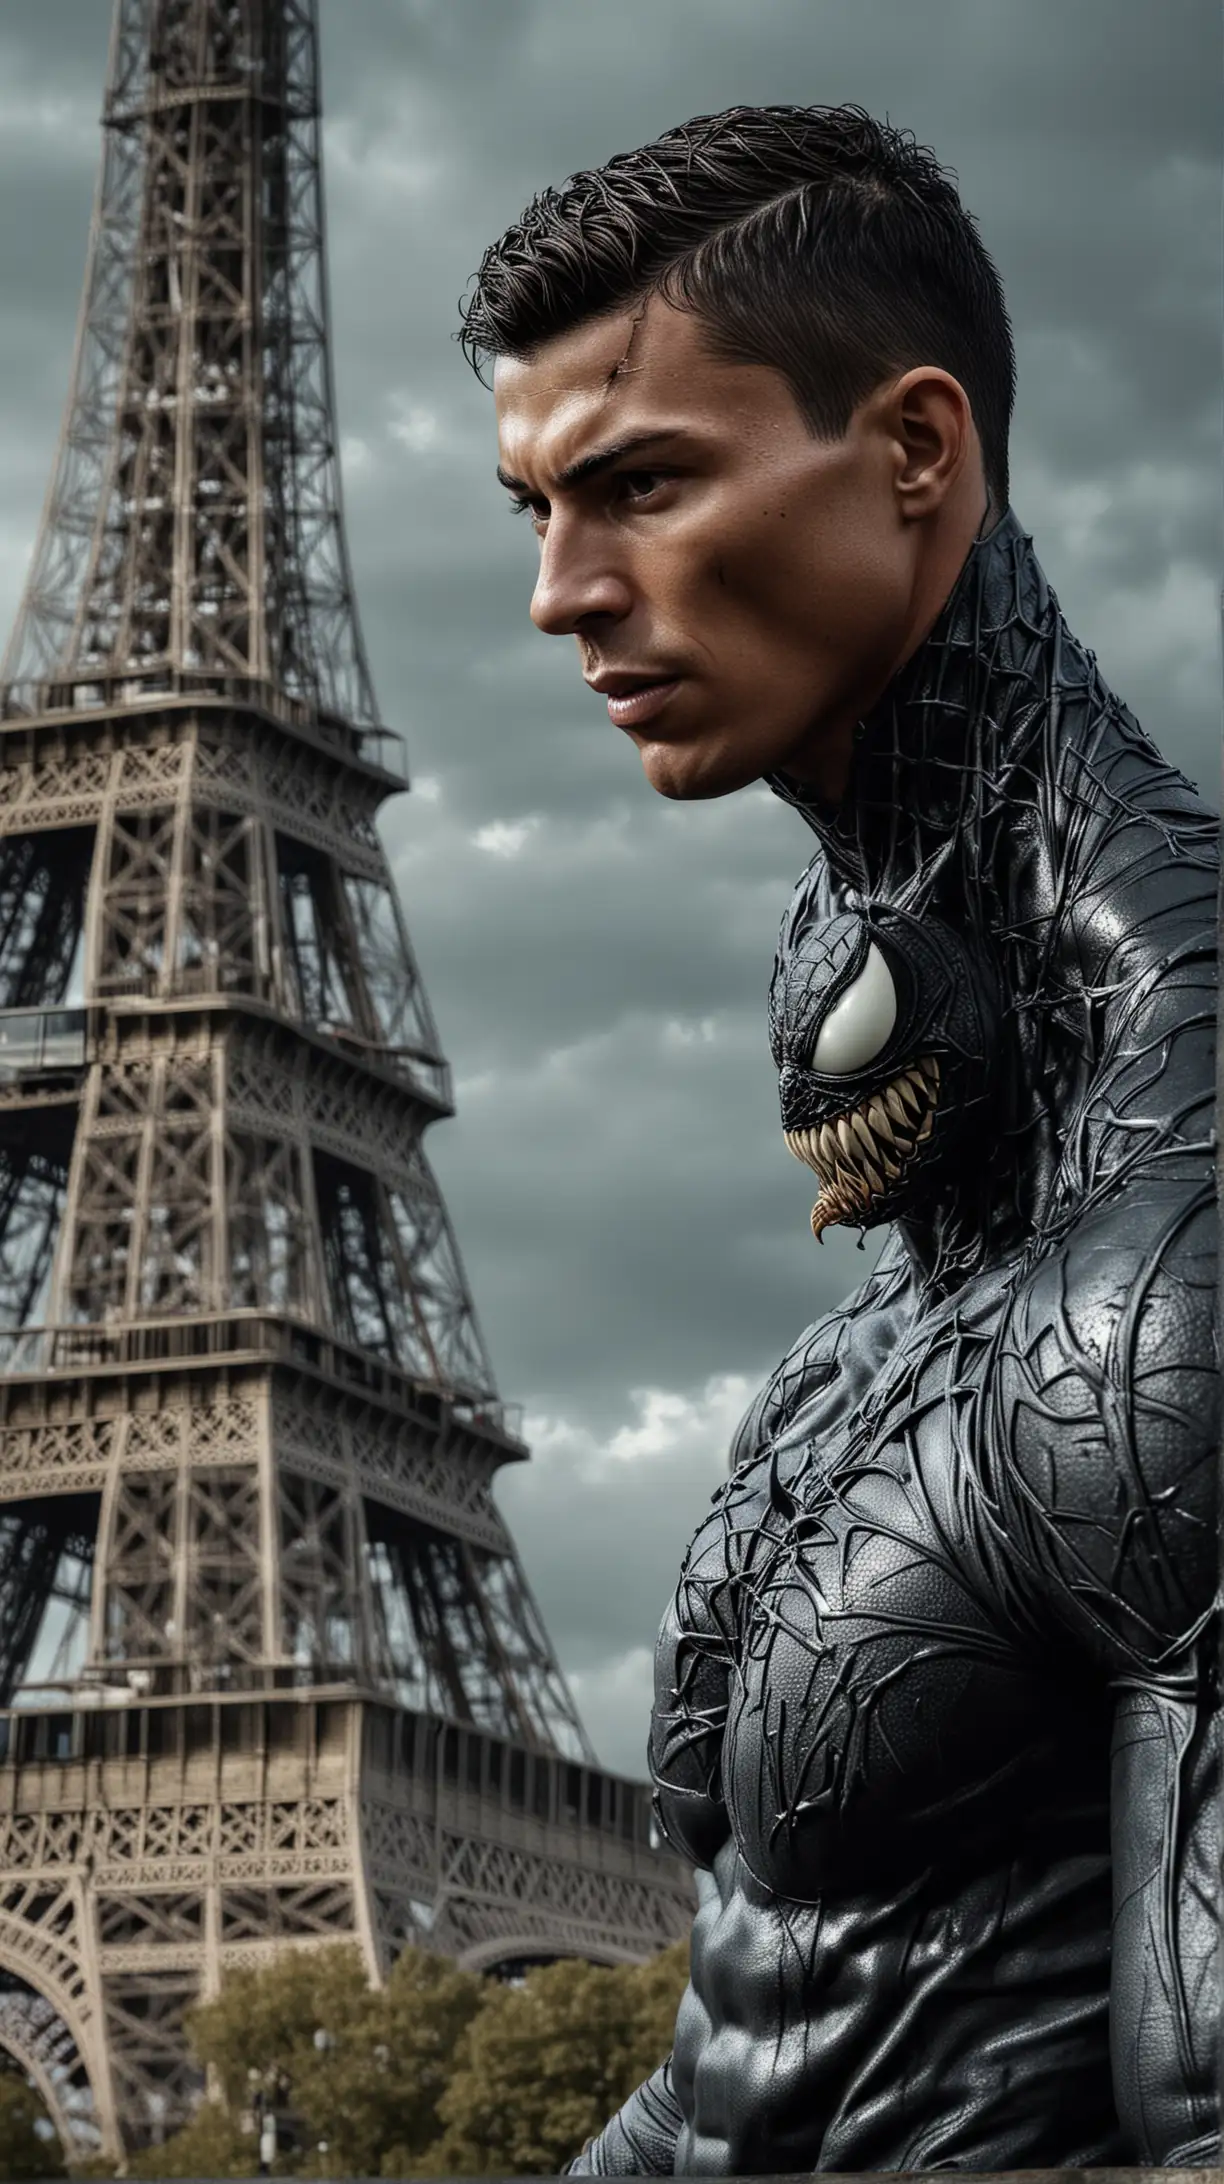 Cristiano Ronaldo Portraying Venom in Front of the Eiffel Tower